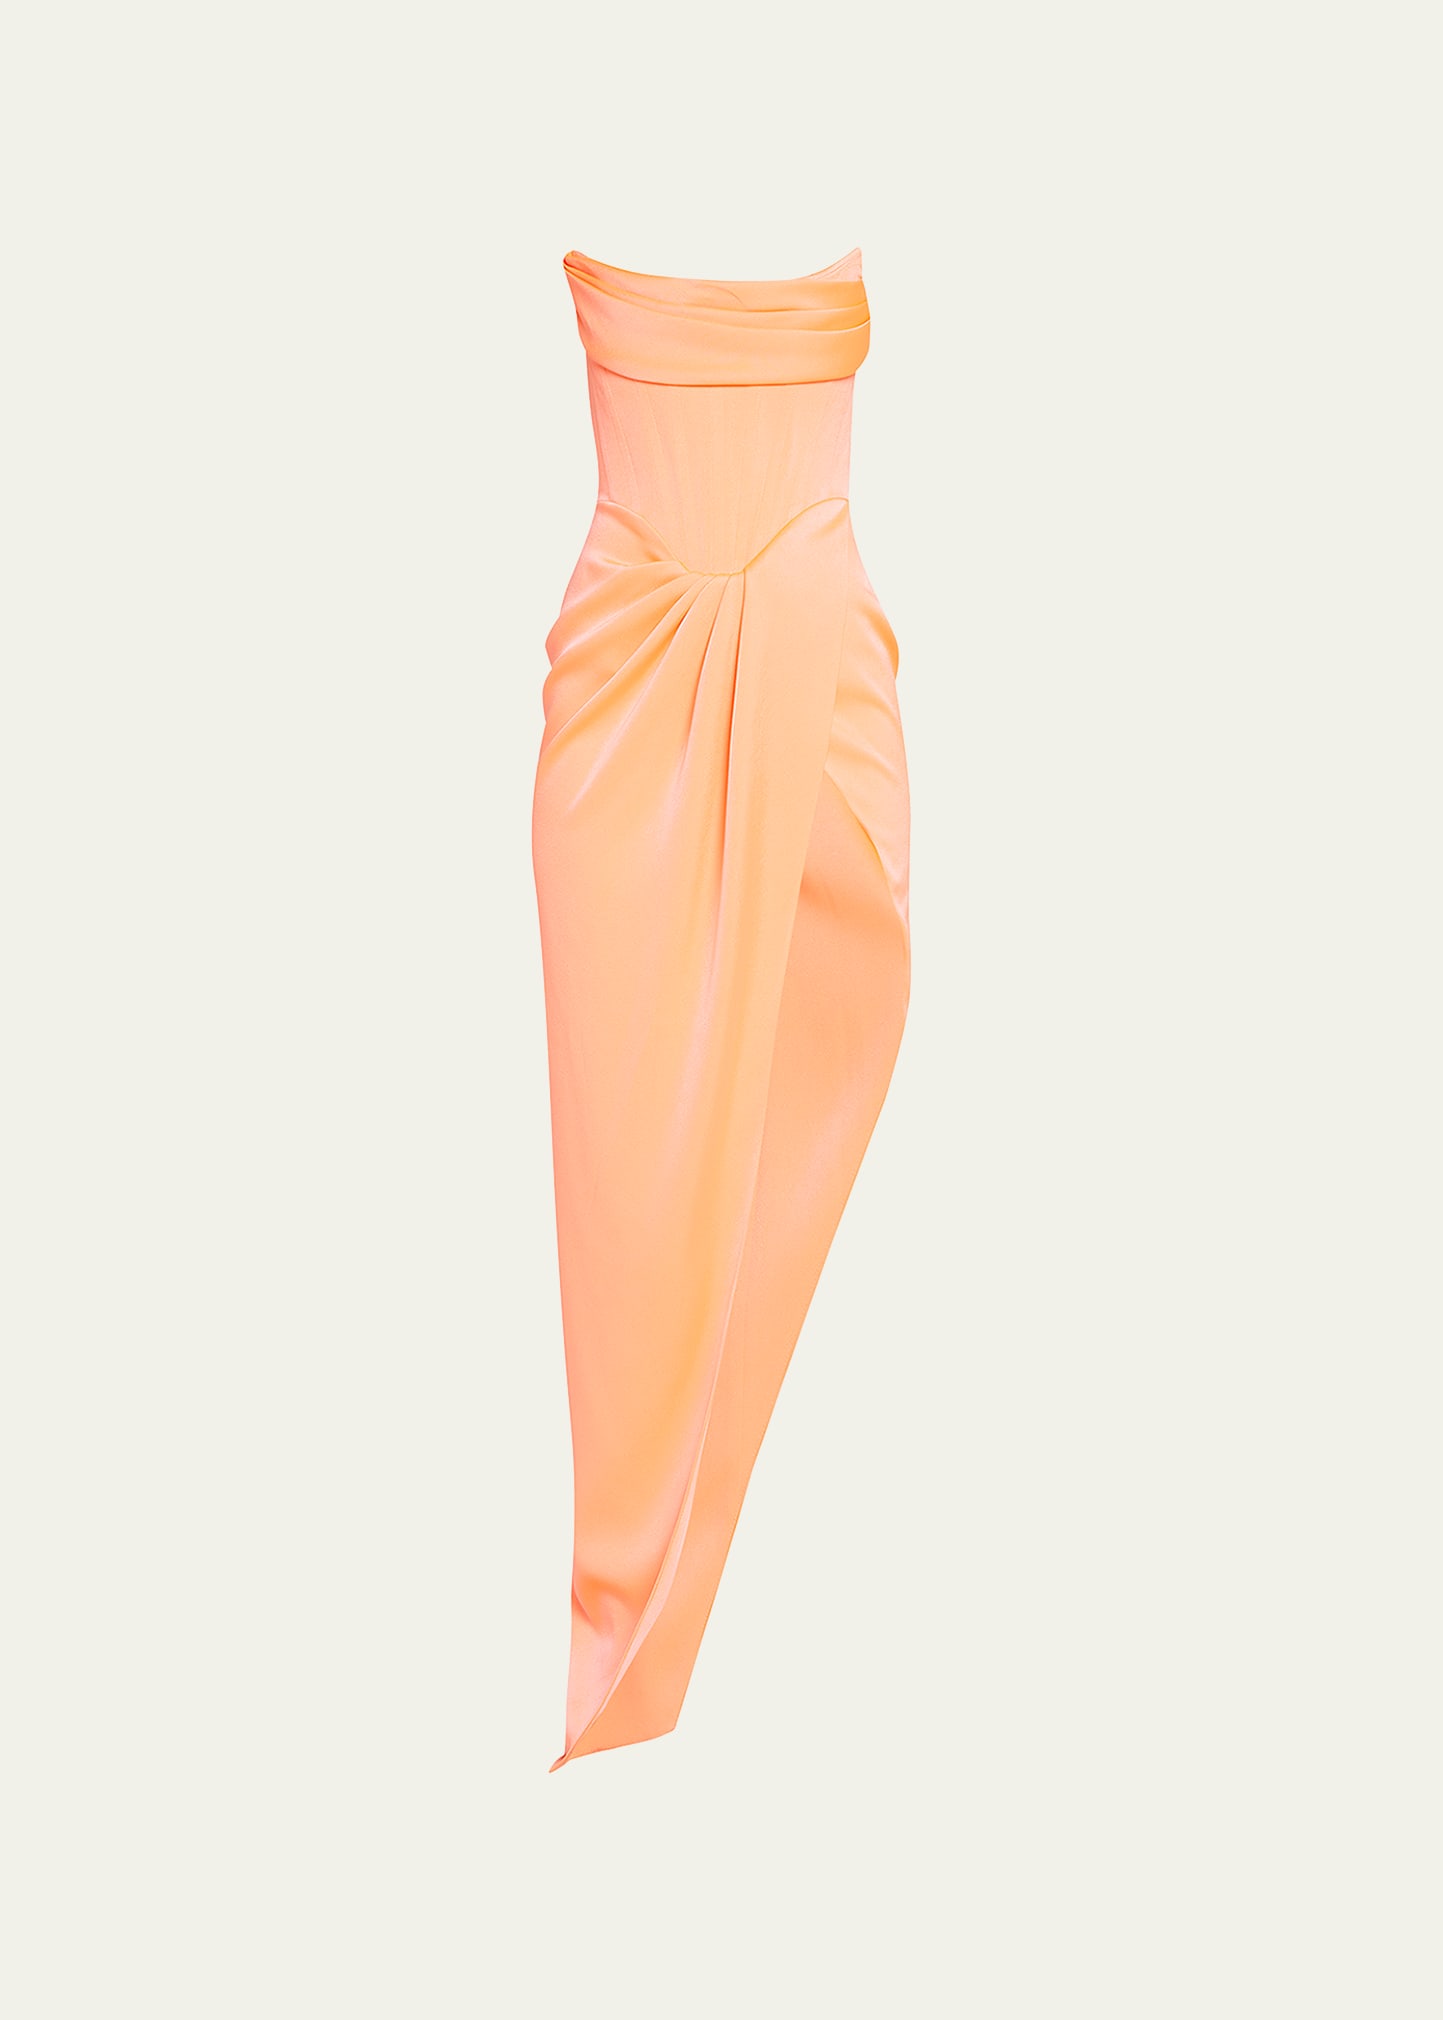 Bergdorf Goodman Square Neckline Long Dress - Orange Dresses, Clothing -  WBG23383